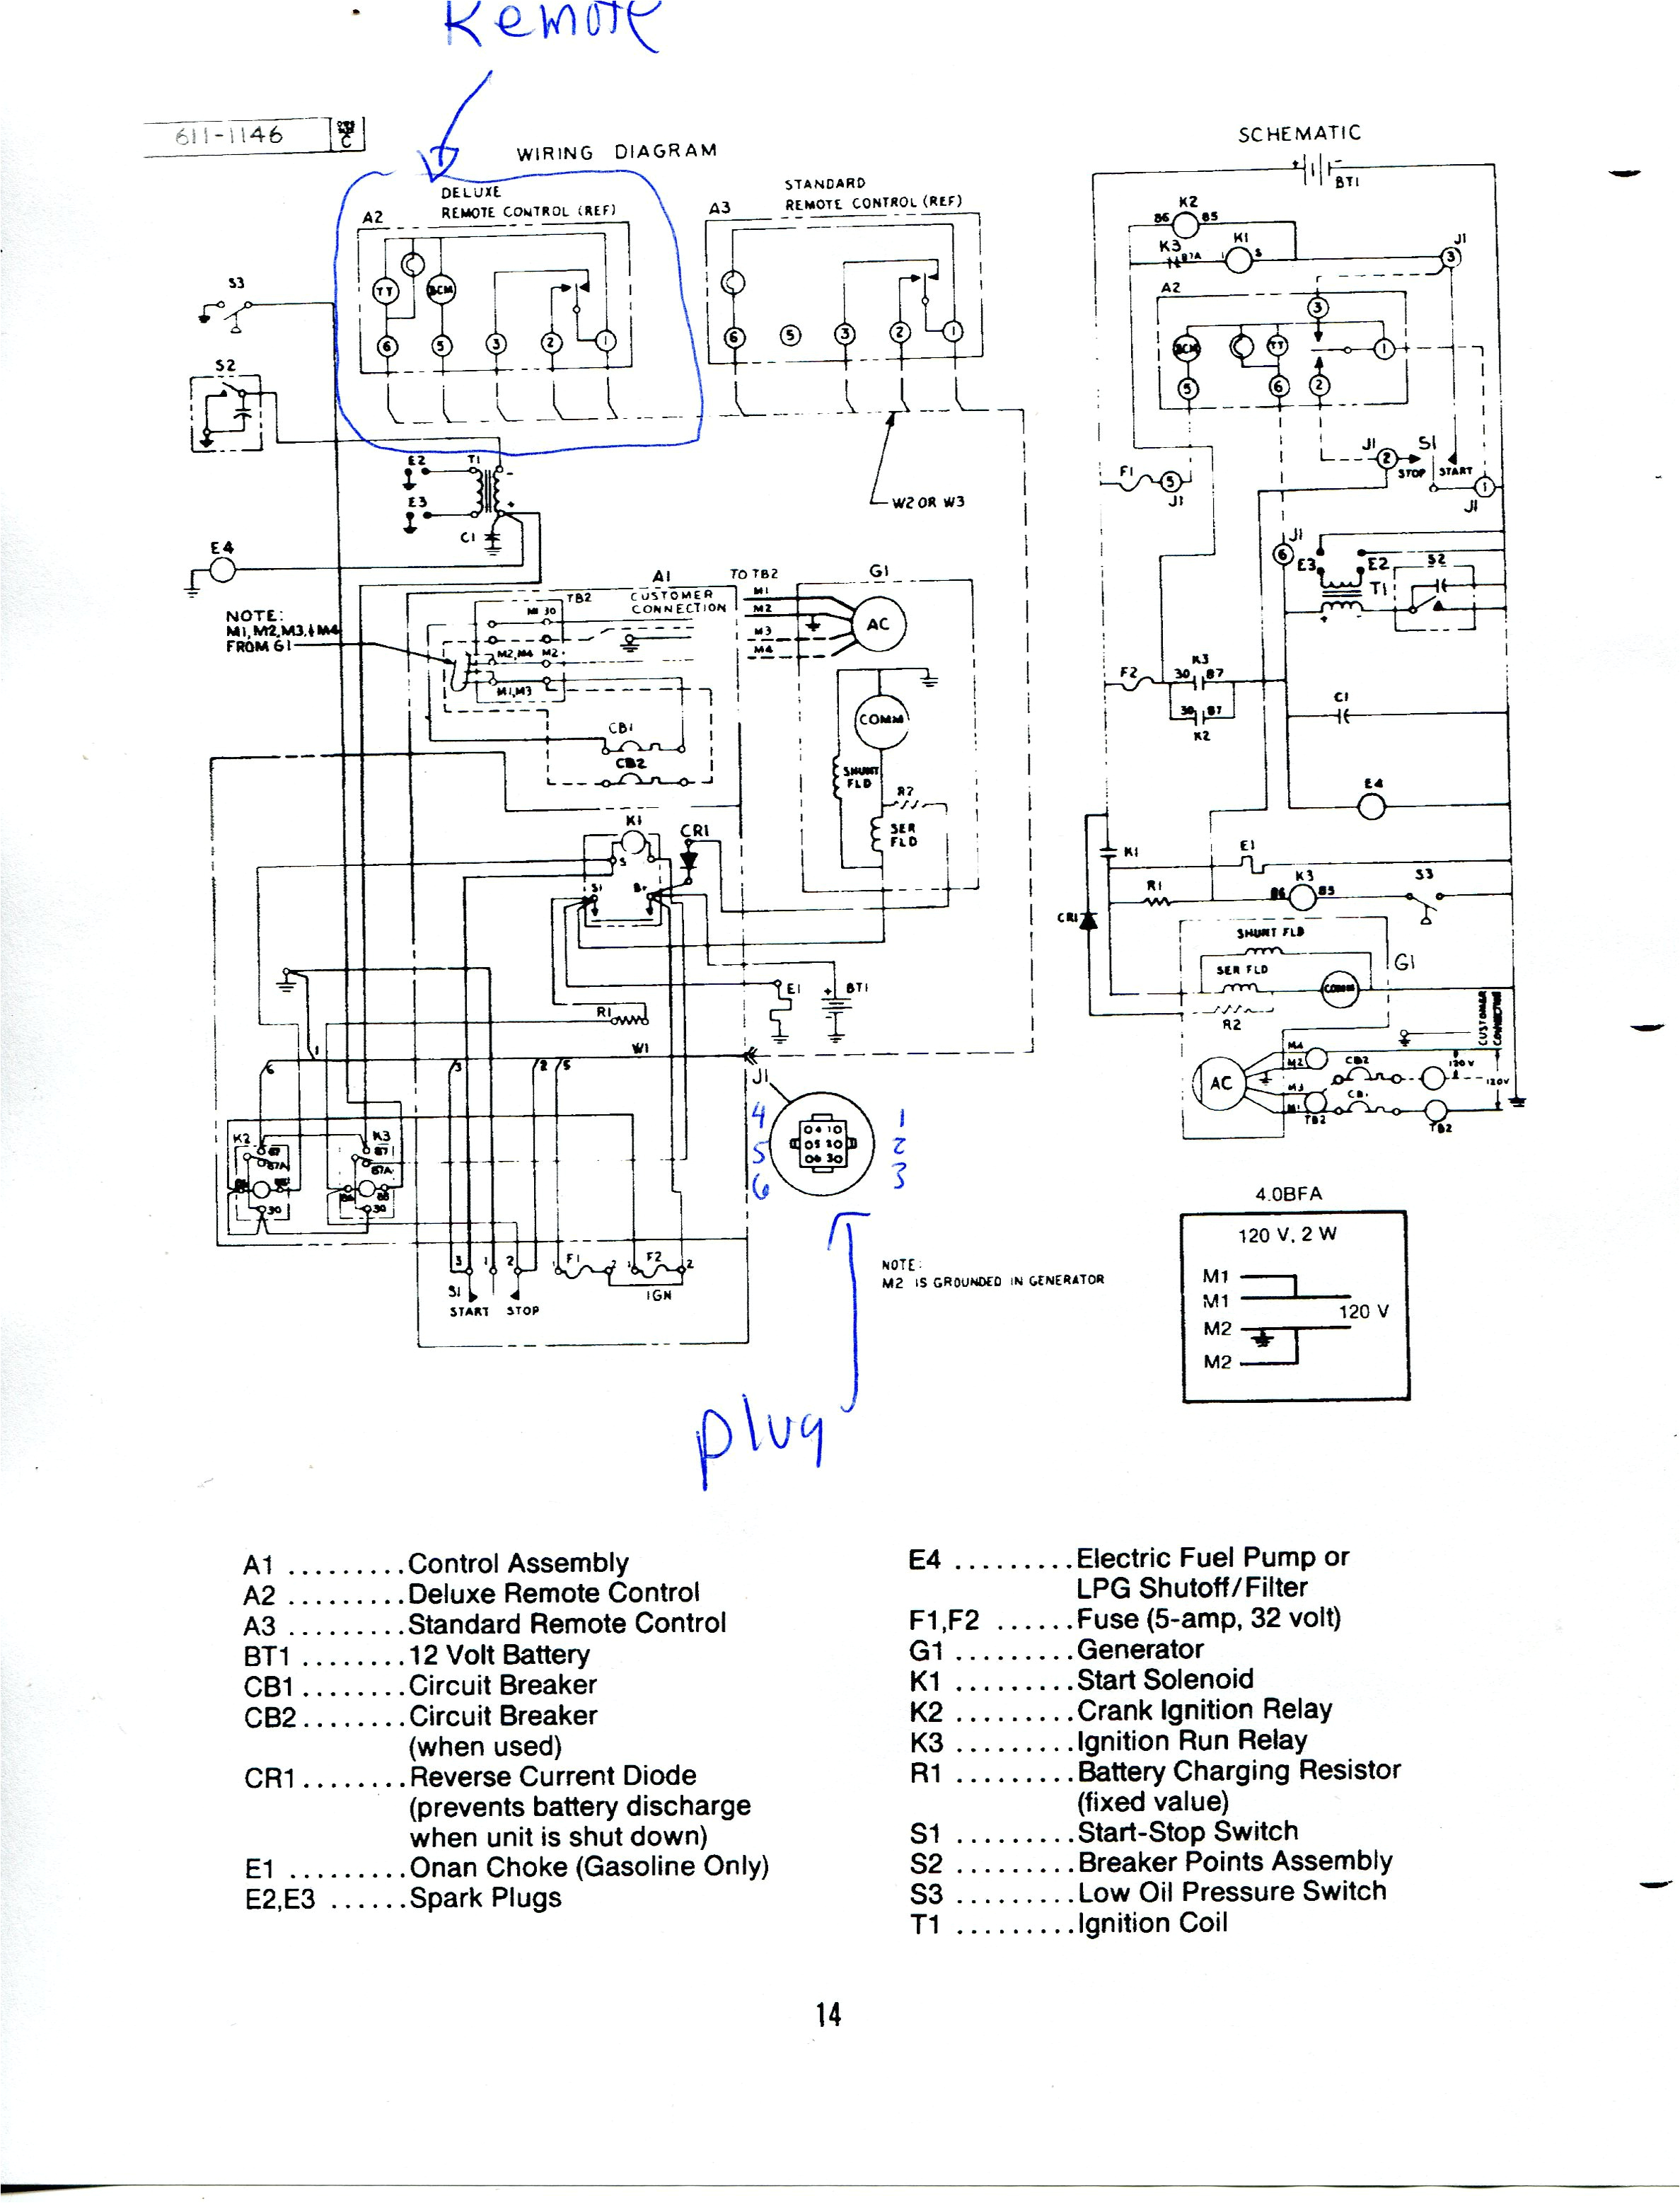 onan generator wiring diagram unique an rv with wire on onan generator wire diagram